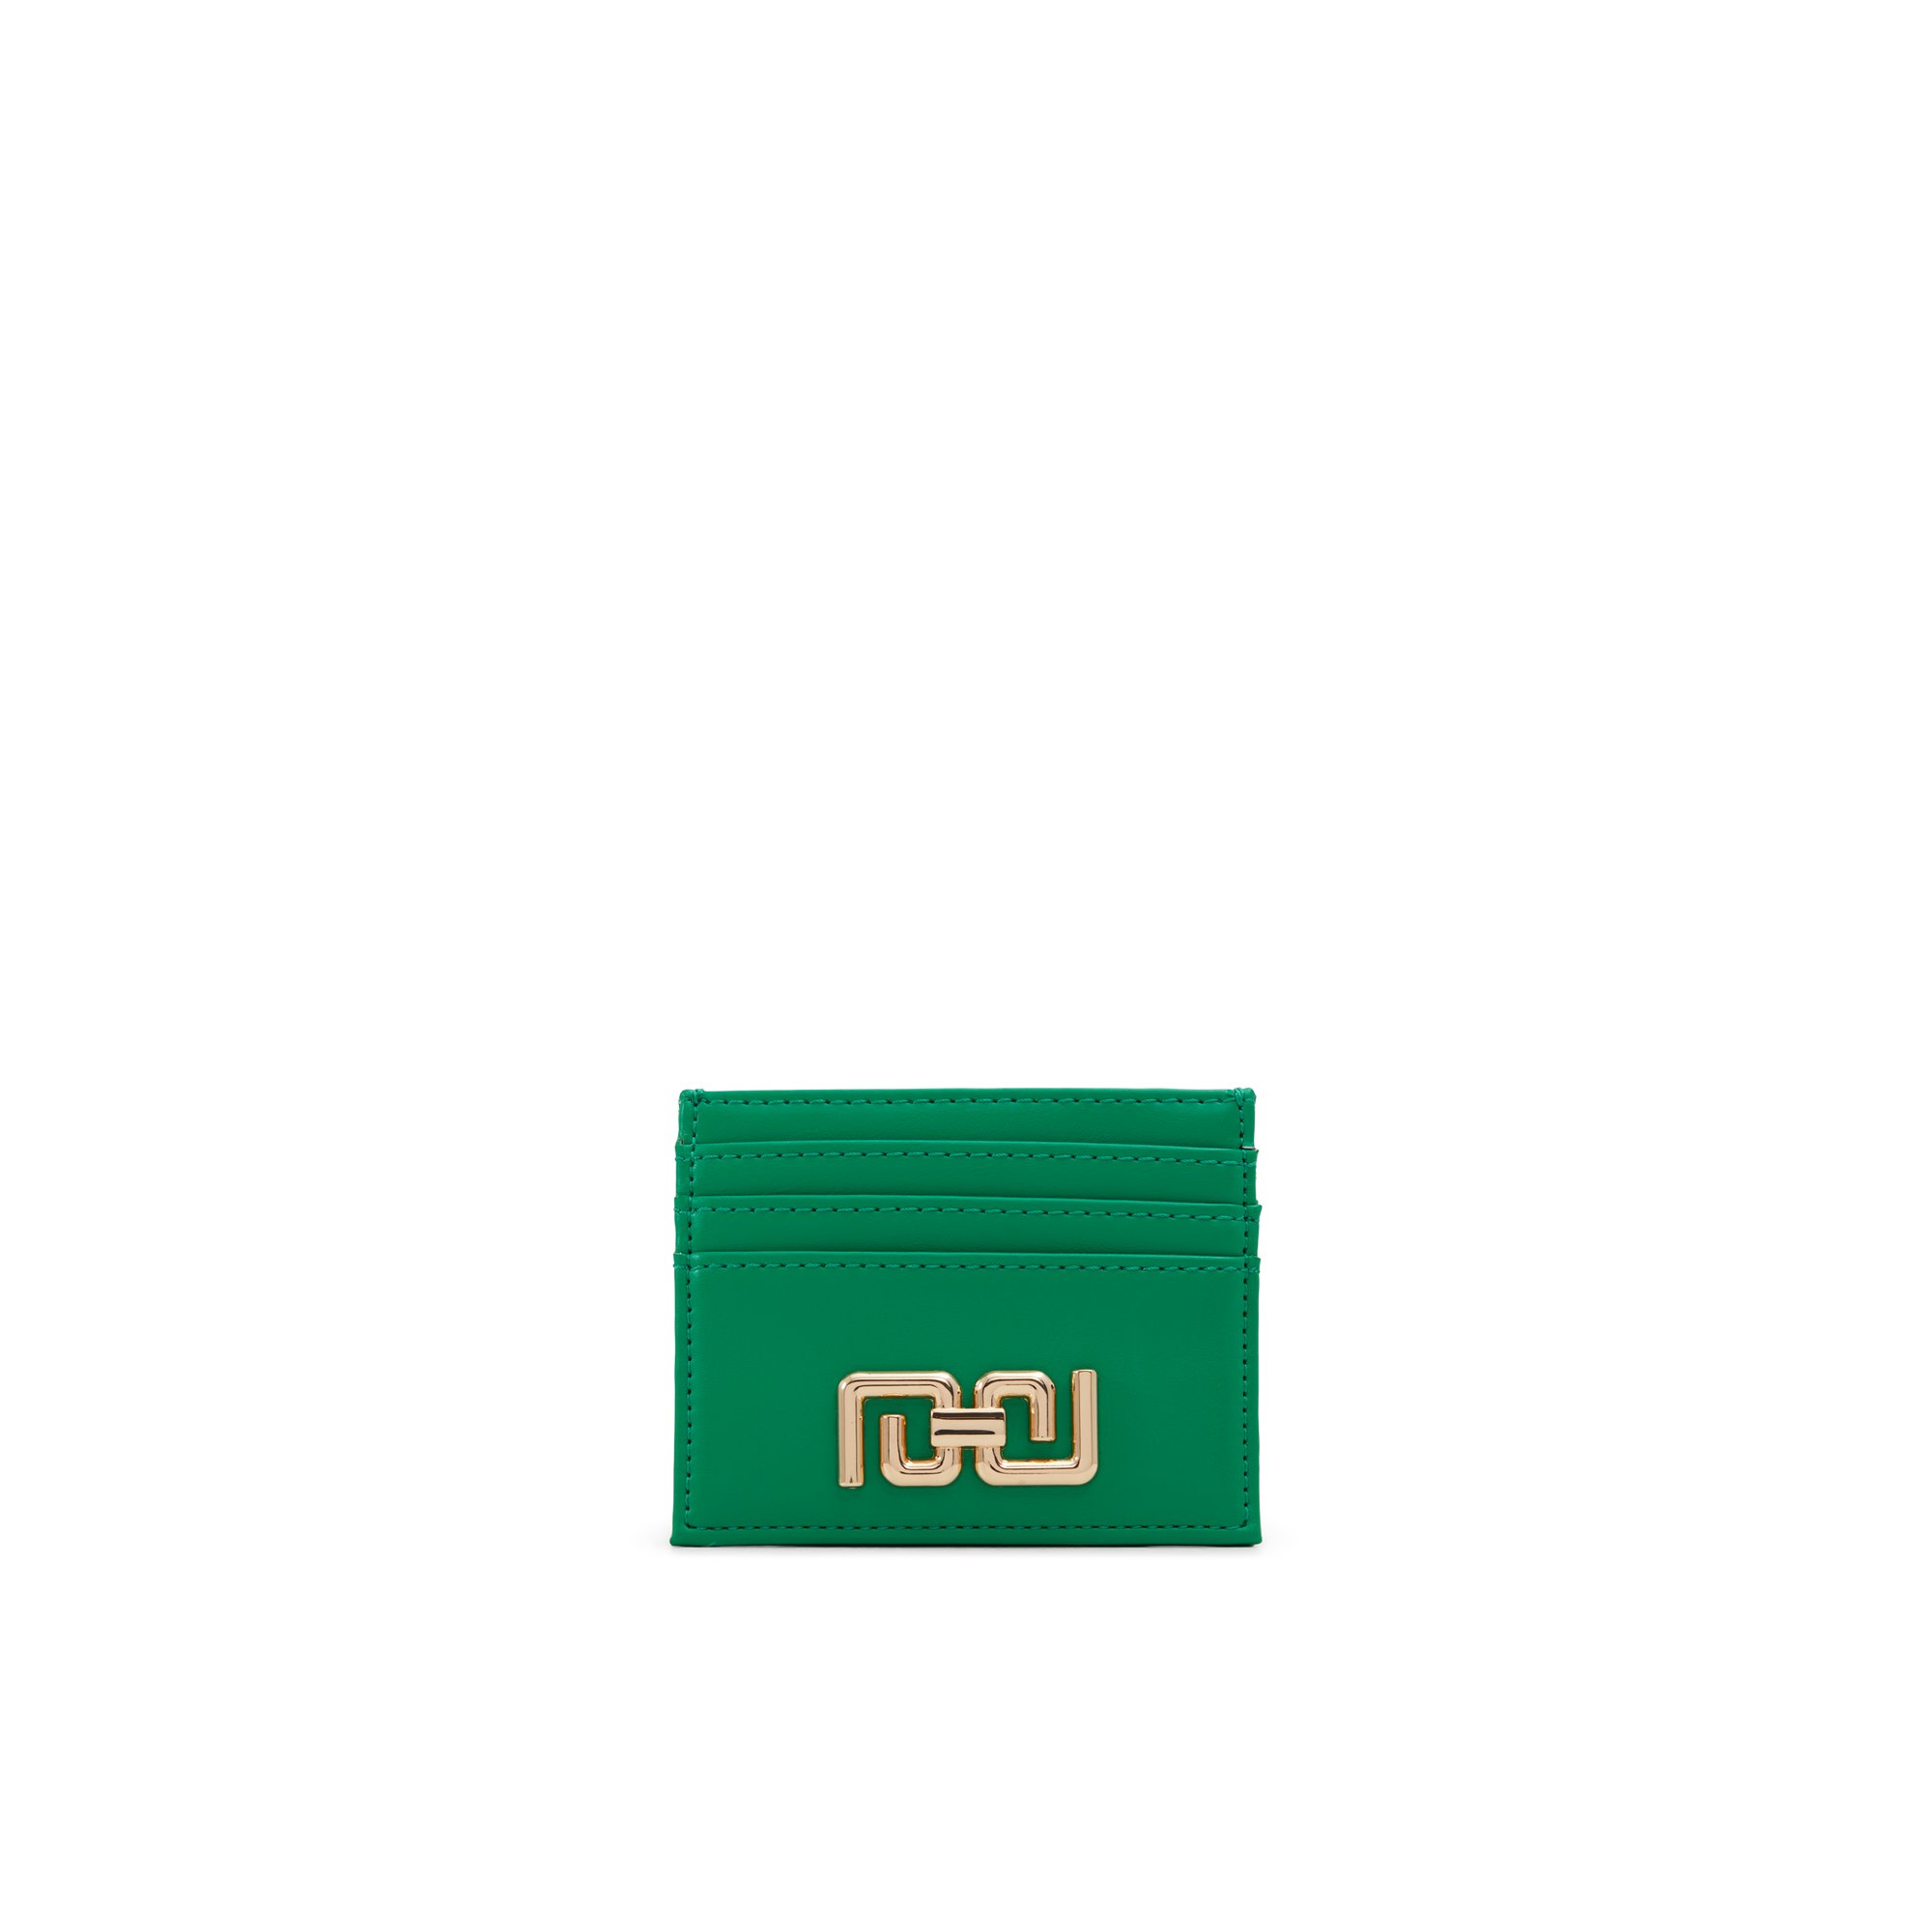 ALDO Cindee - Women's Handbags Wallets - Green